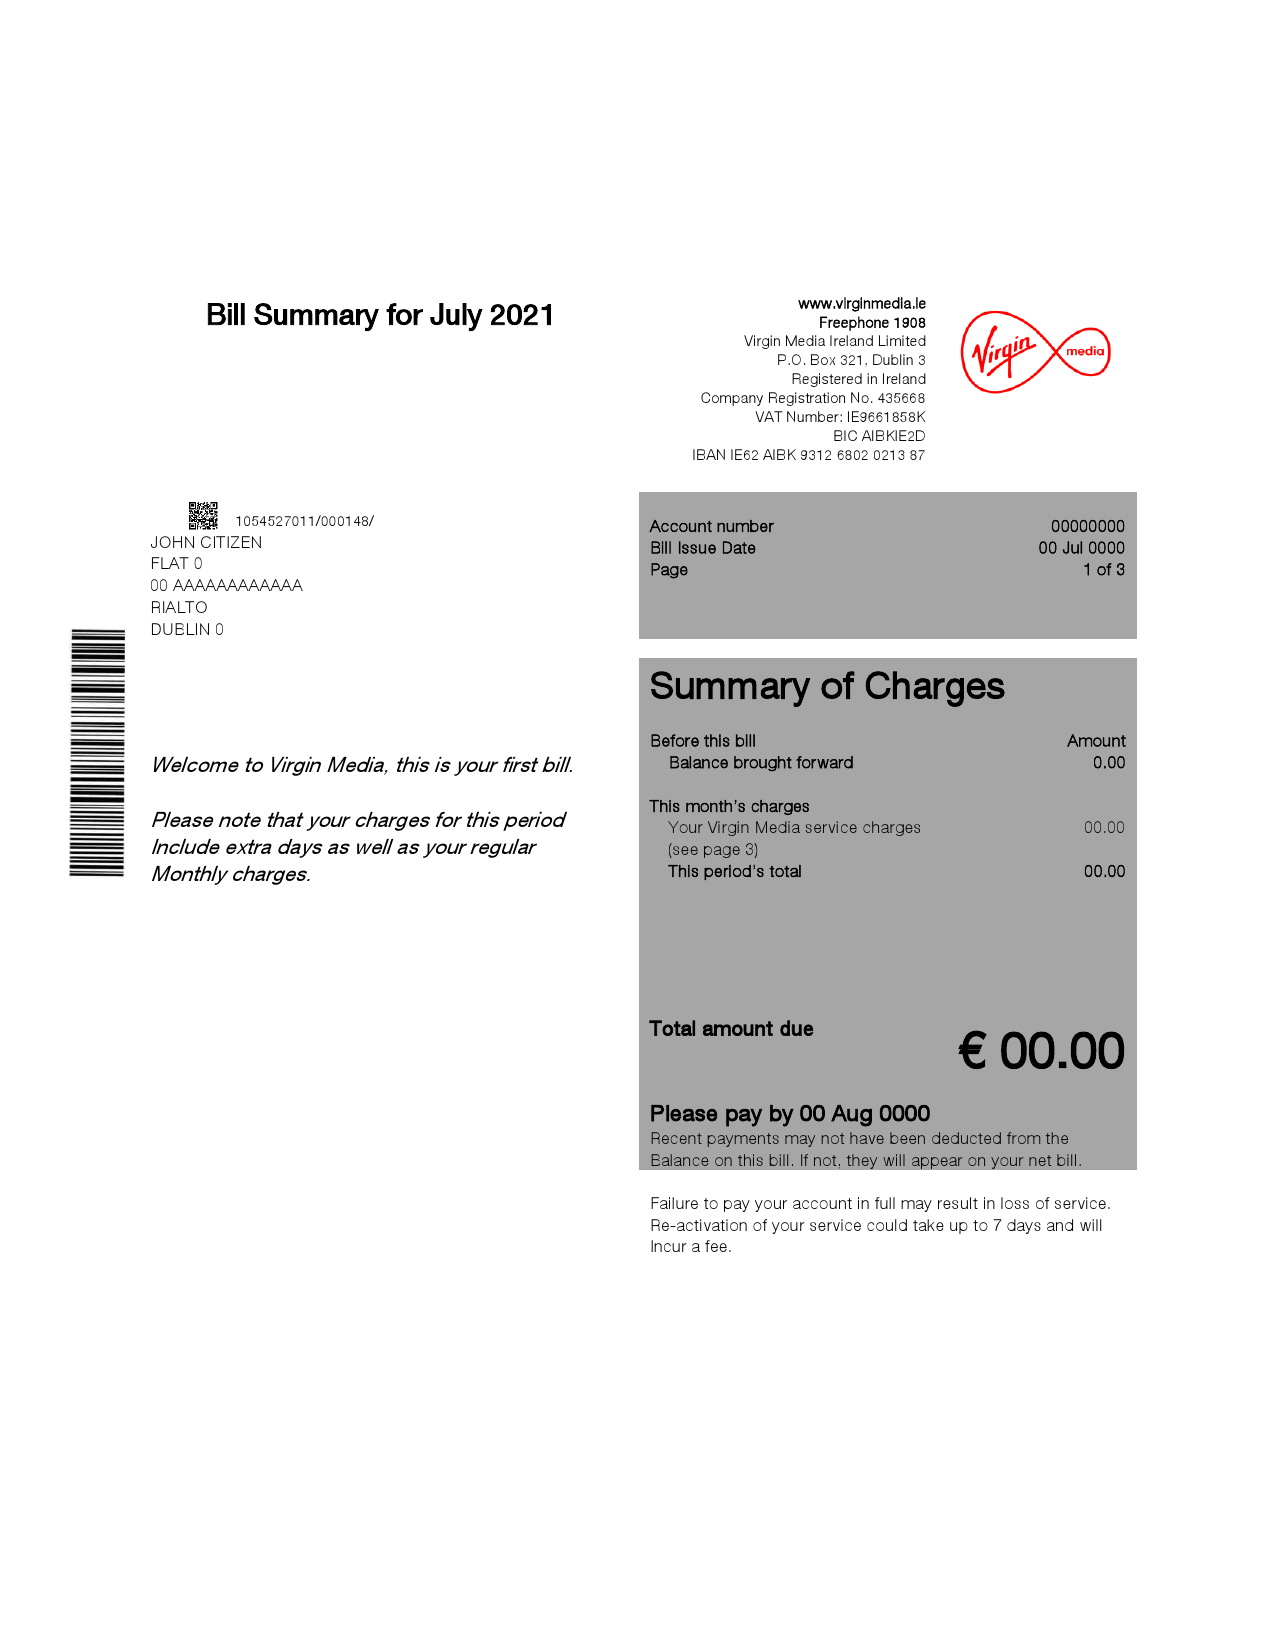 Ireland Virgin Media utility bill template editable in Word and PDF, version 1